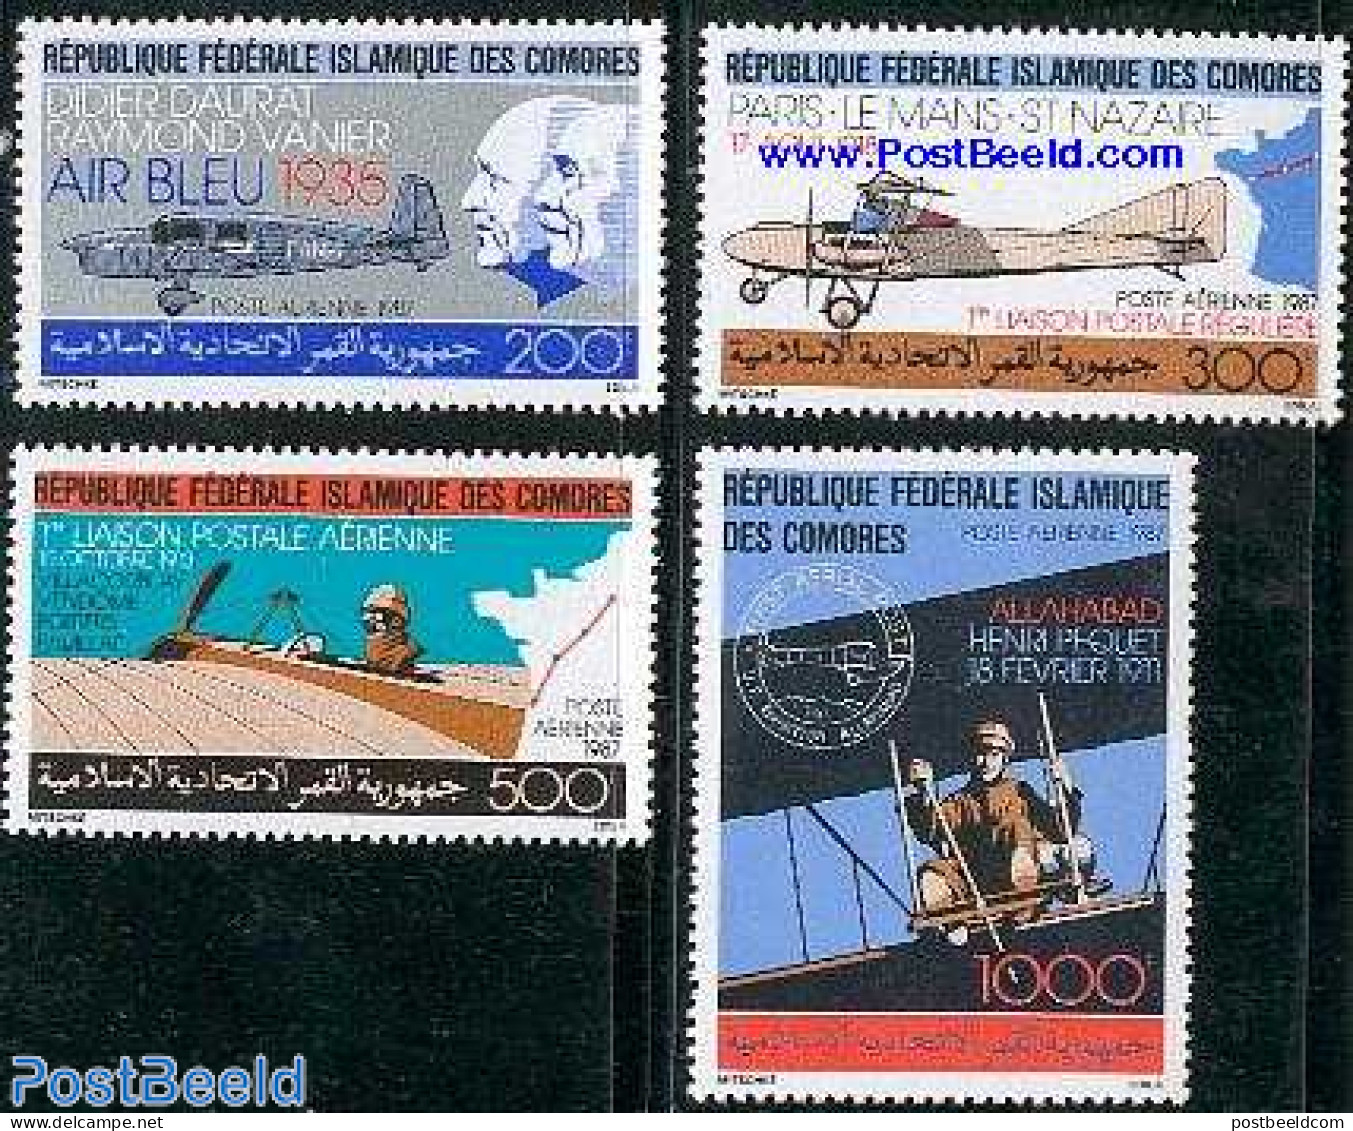 Comoros 1987 Airmail, Aeroplanes 4v, Mint NH, Transport - Various - Post - Aircraft & Aviation - Maps - Poste